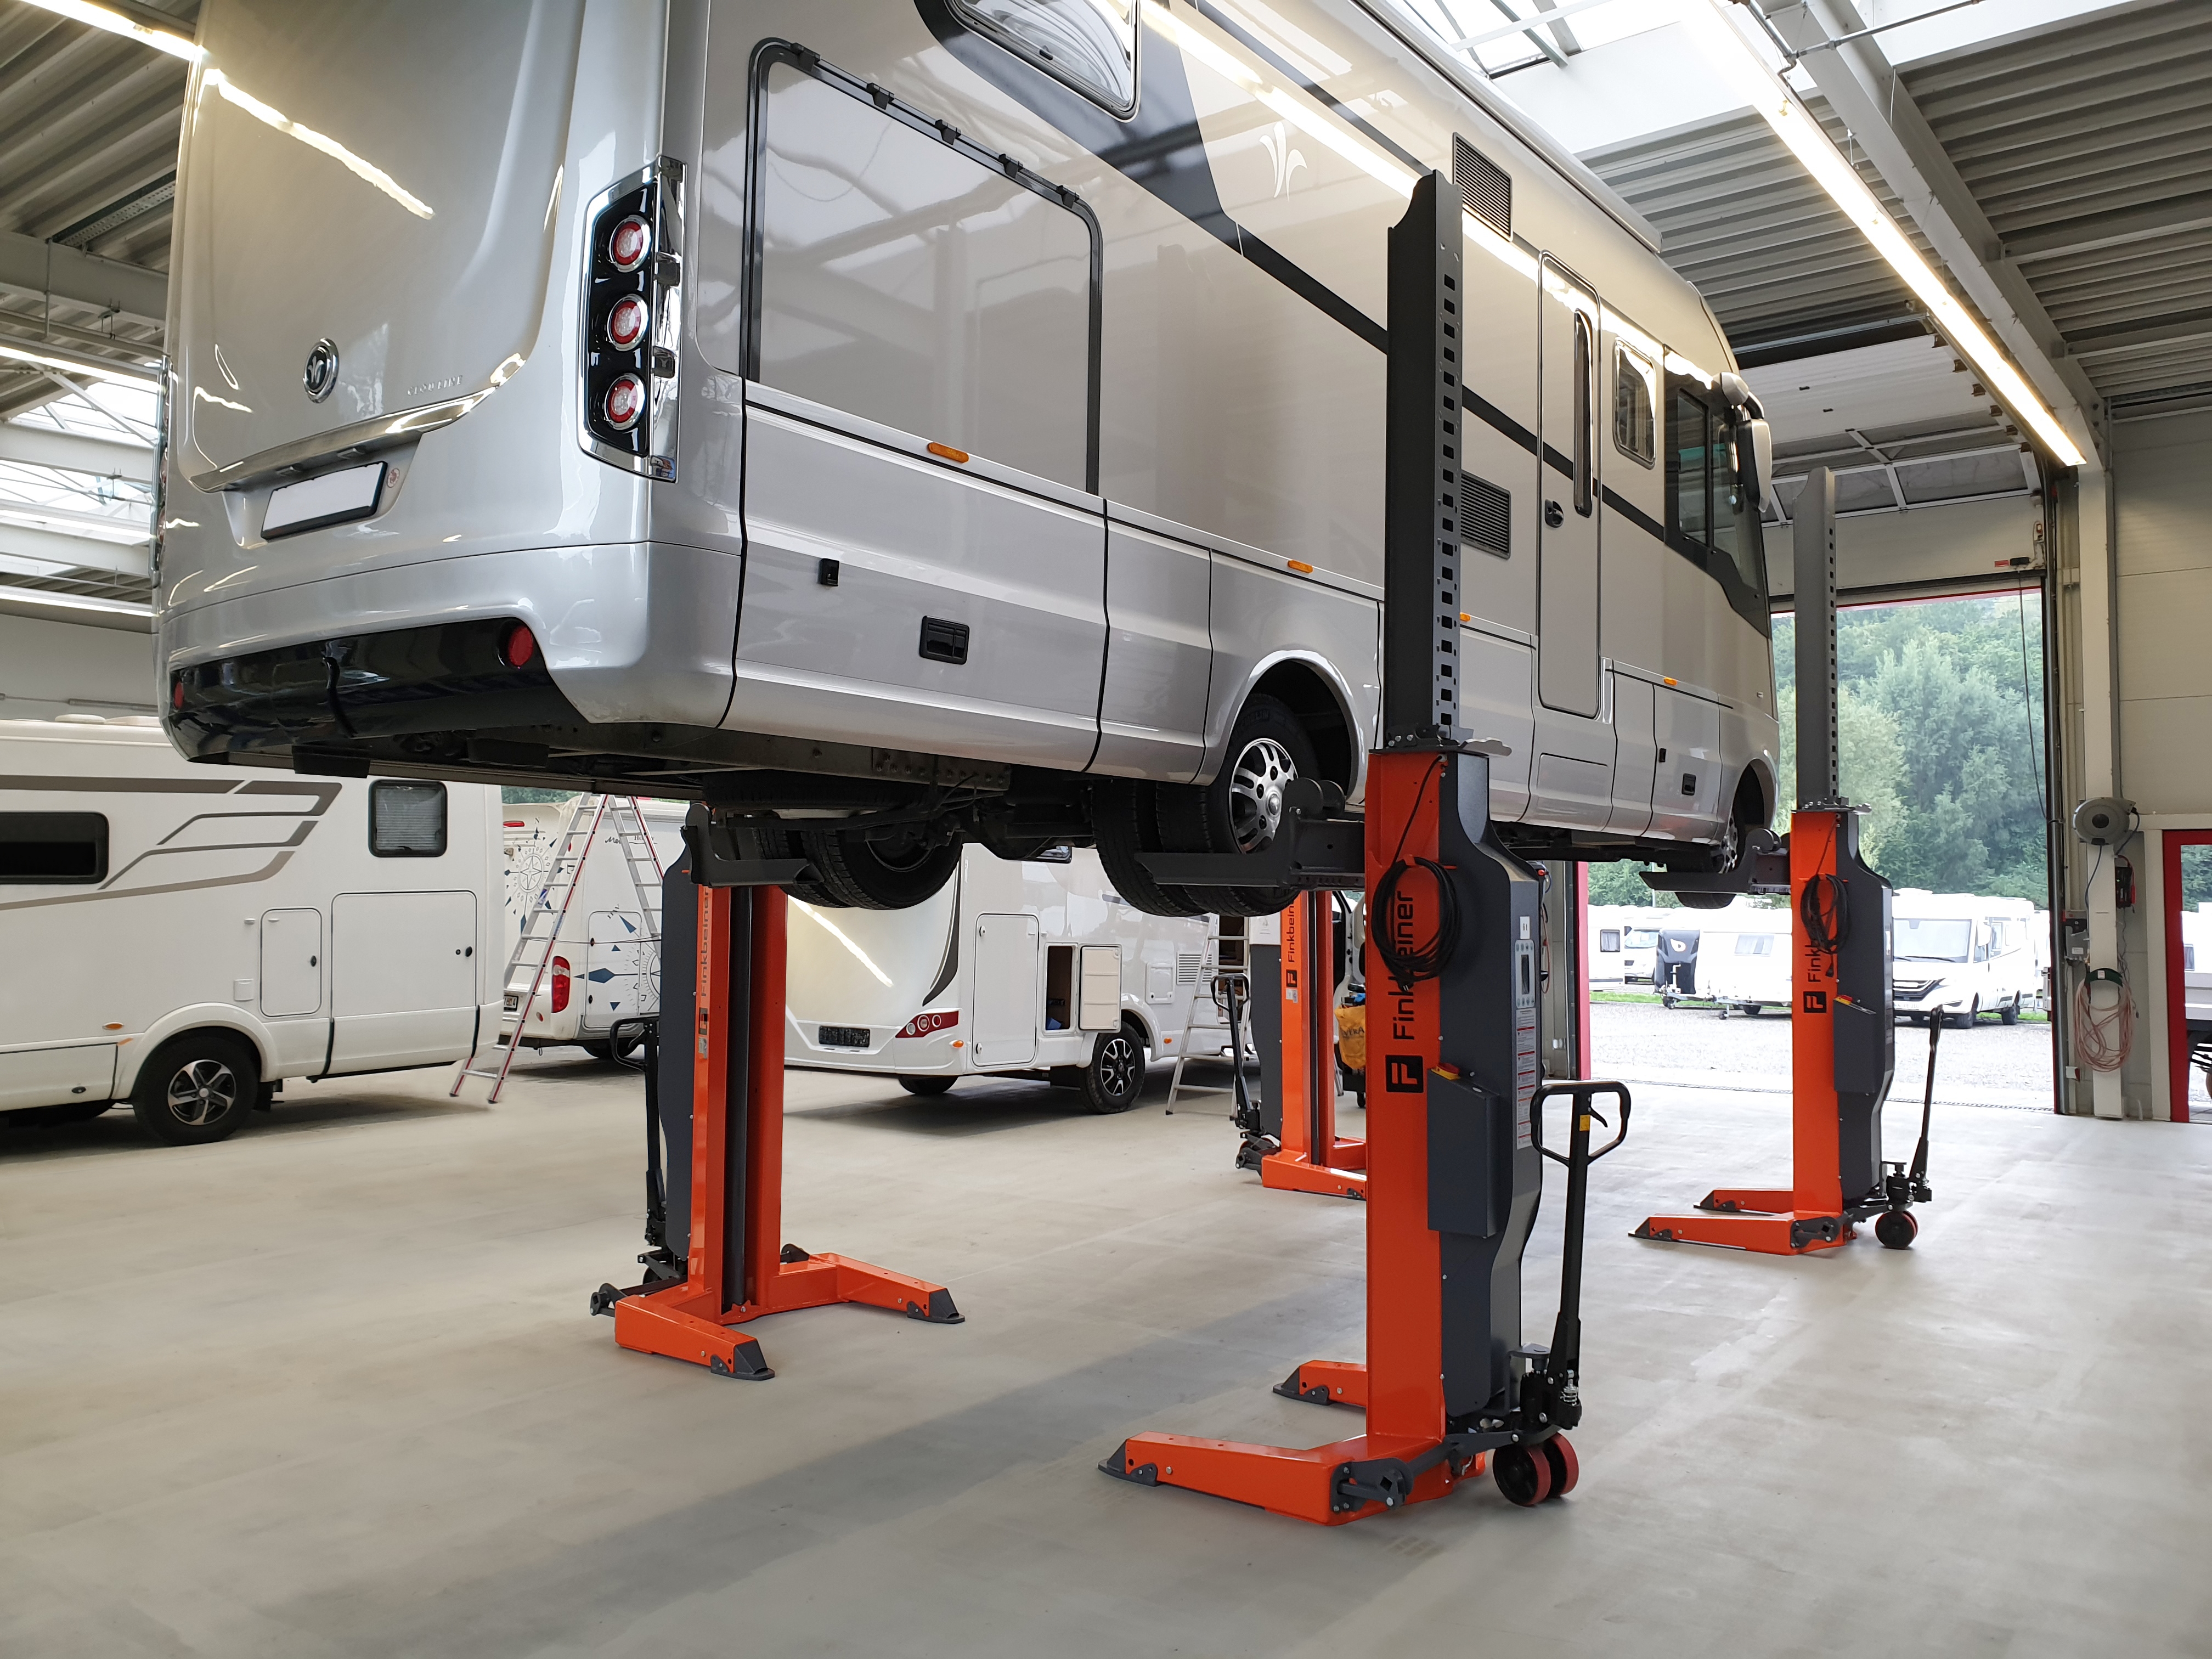 Using four mobile columns, a camper van is lifted for maintenance works in a workshop of a caravanning dealer.